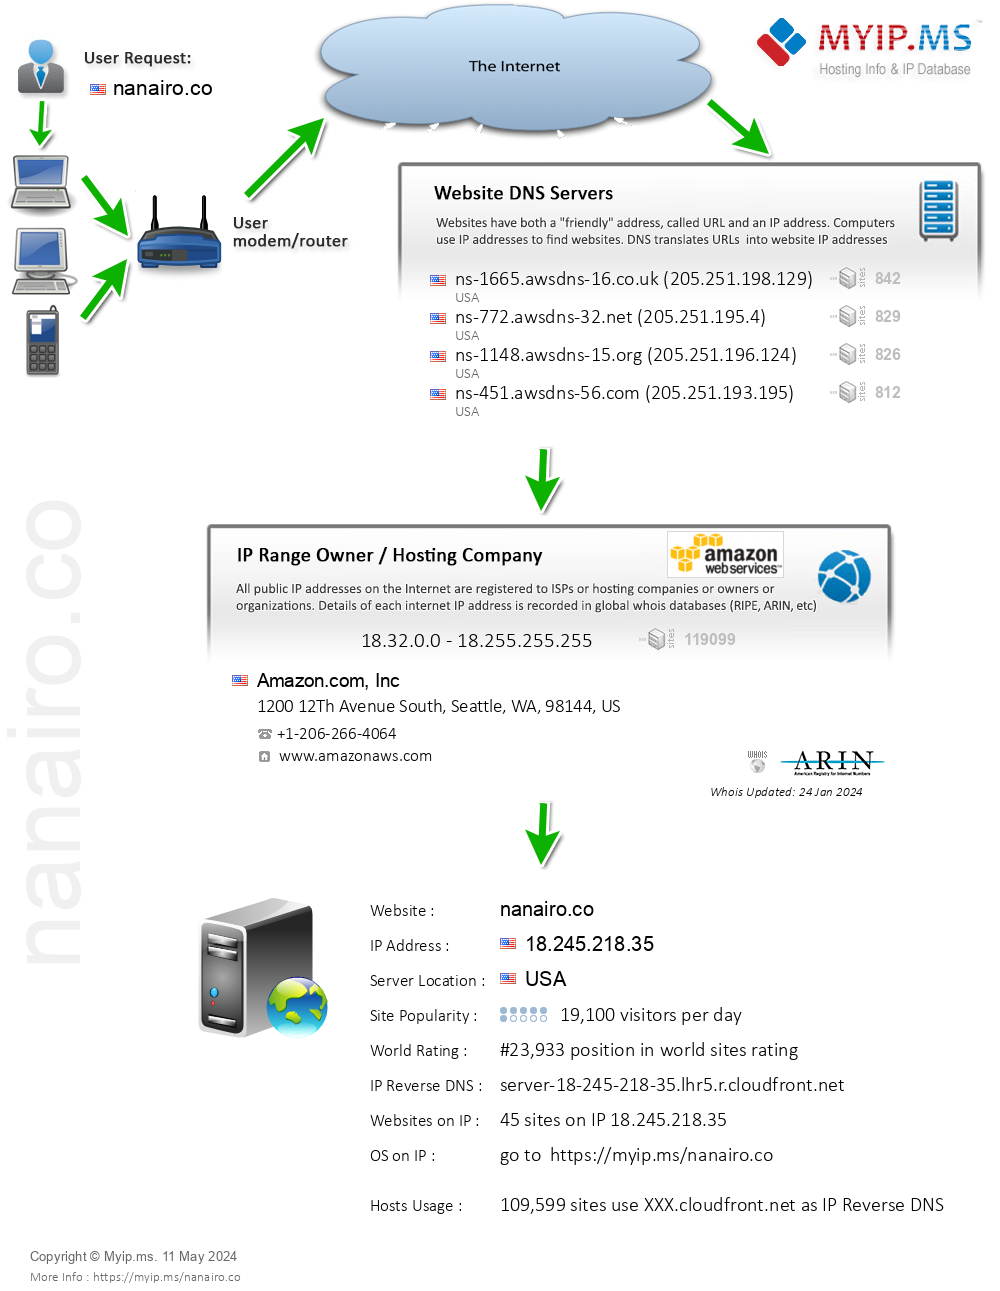 Nanairo.co - Website Hosting Visual IP Diagram